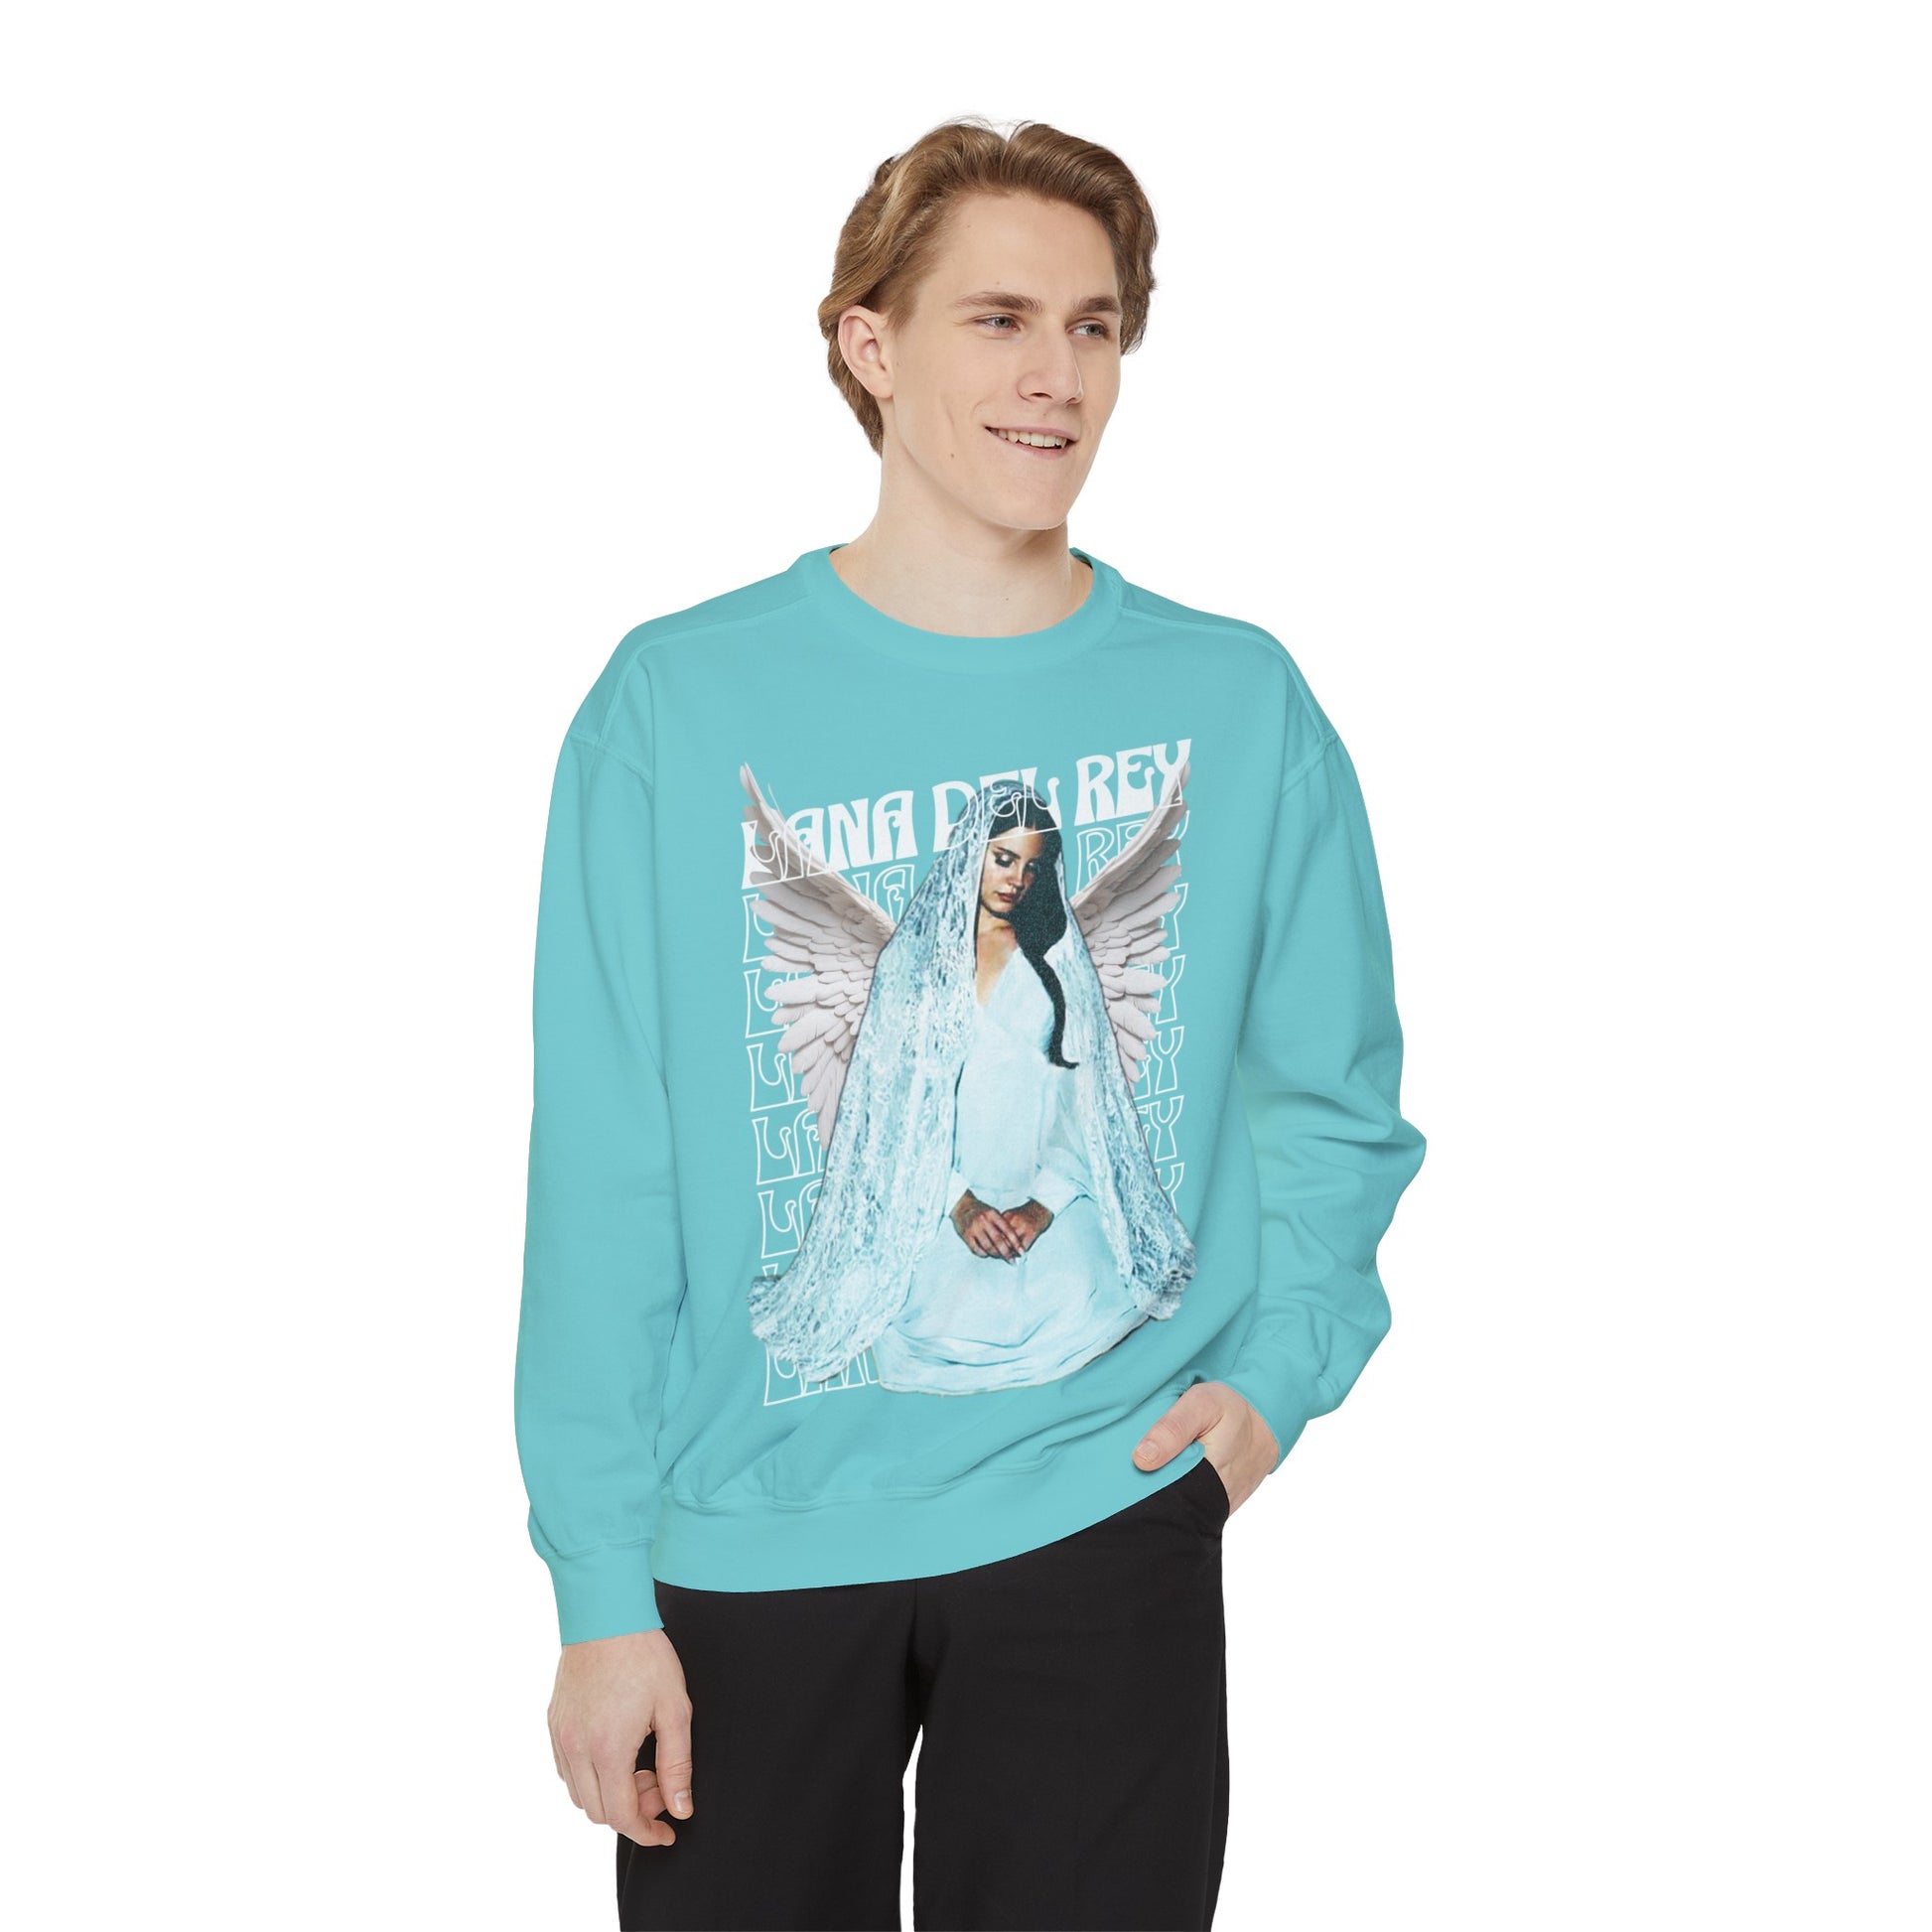 Lana Del Rey Sweatshirt